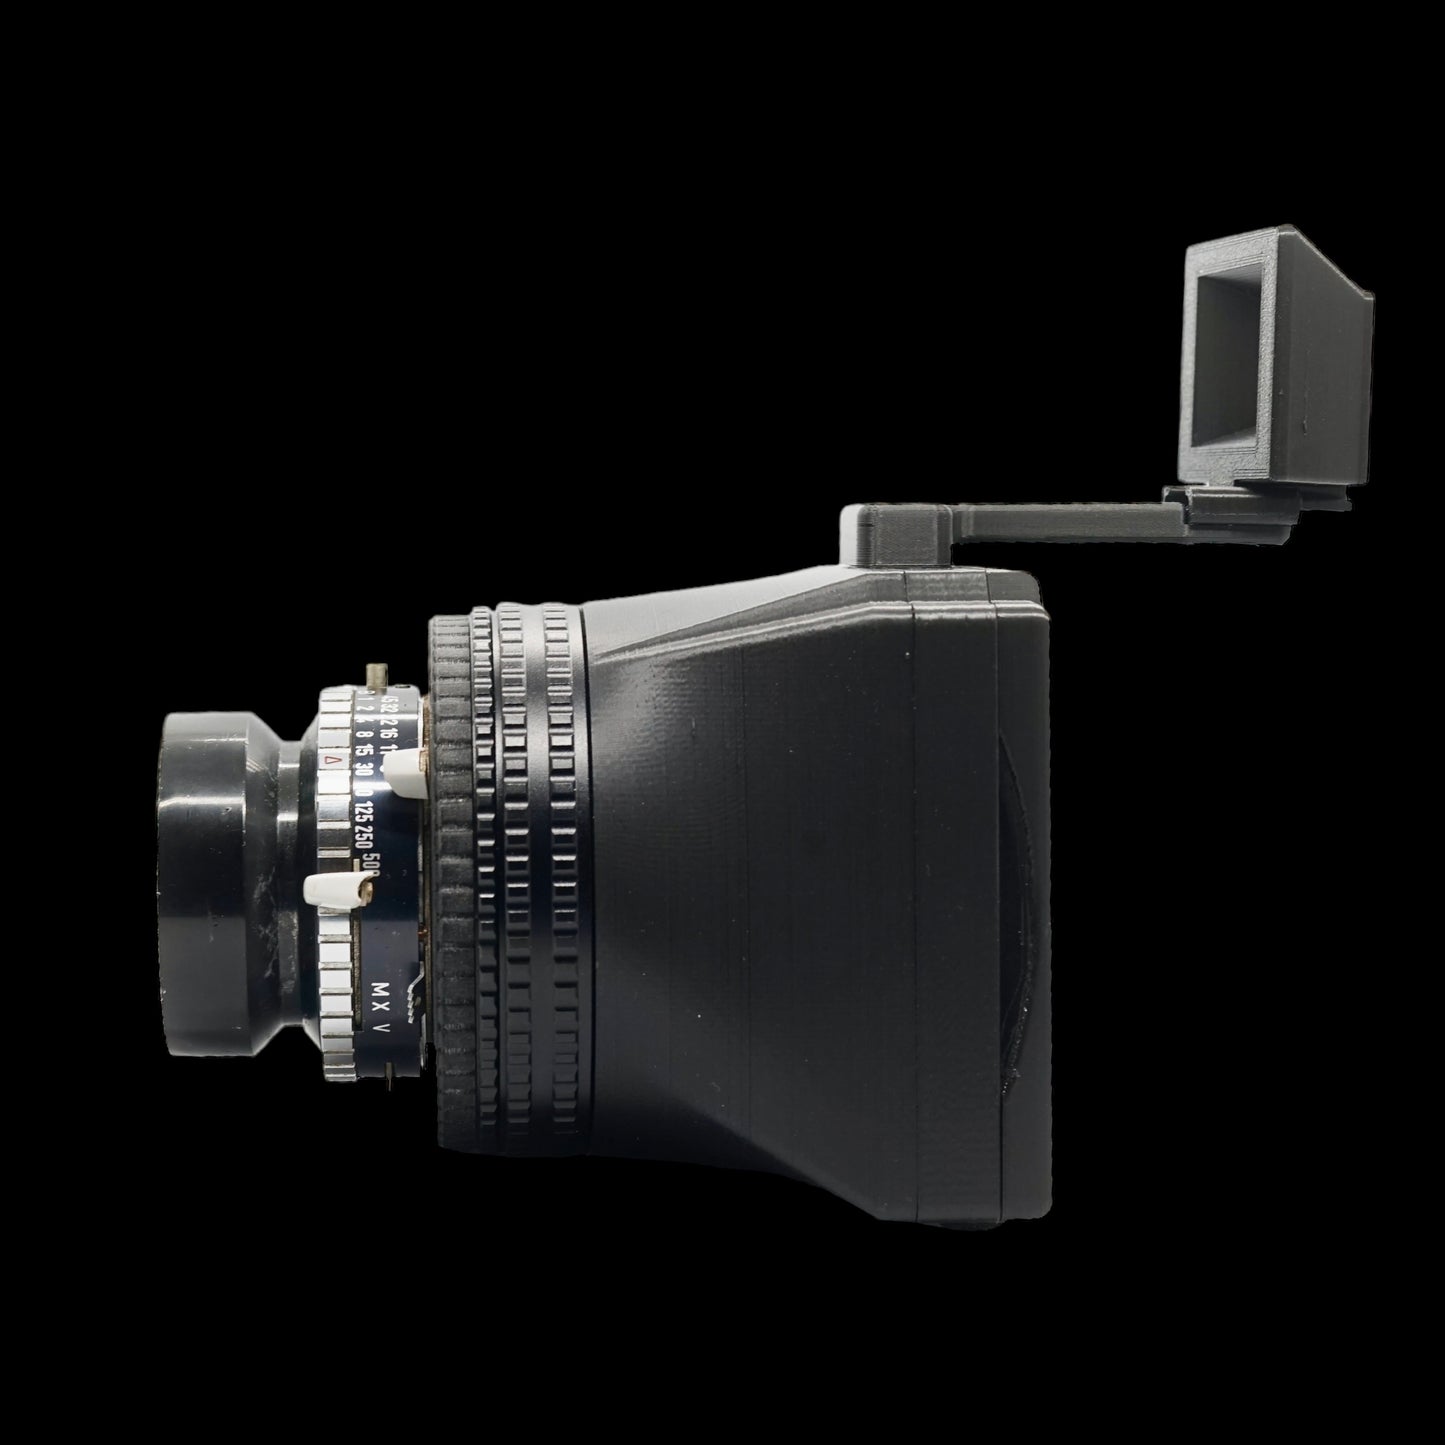 6x6 Medium Format System with Schneider 75mm F8 lens